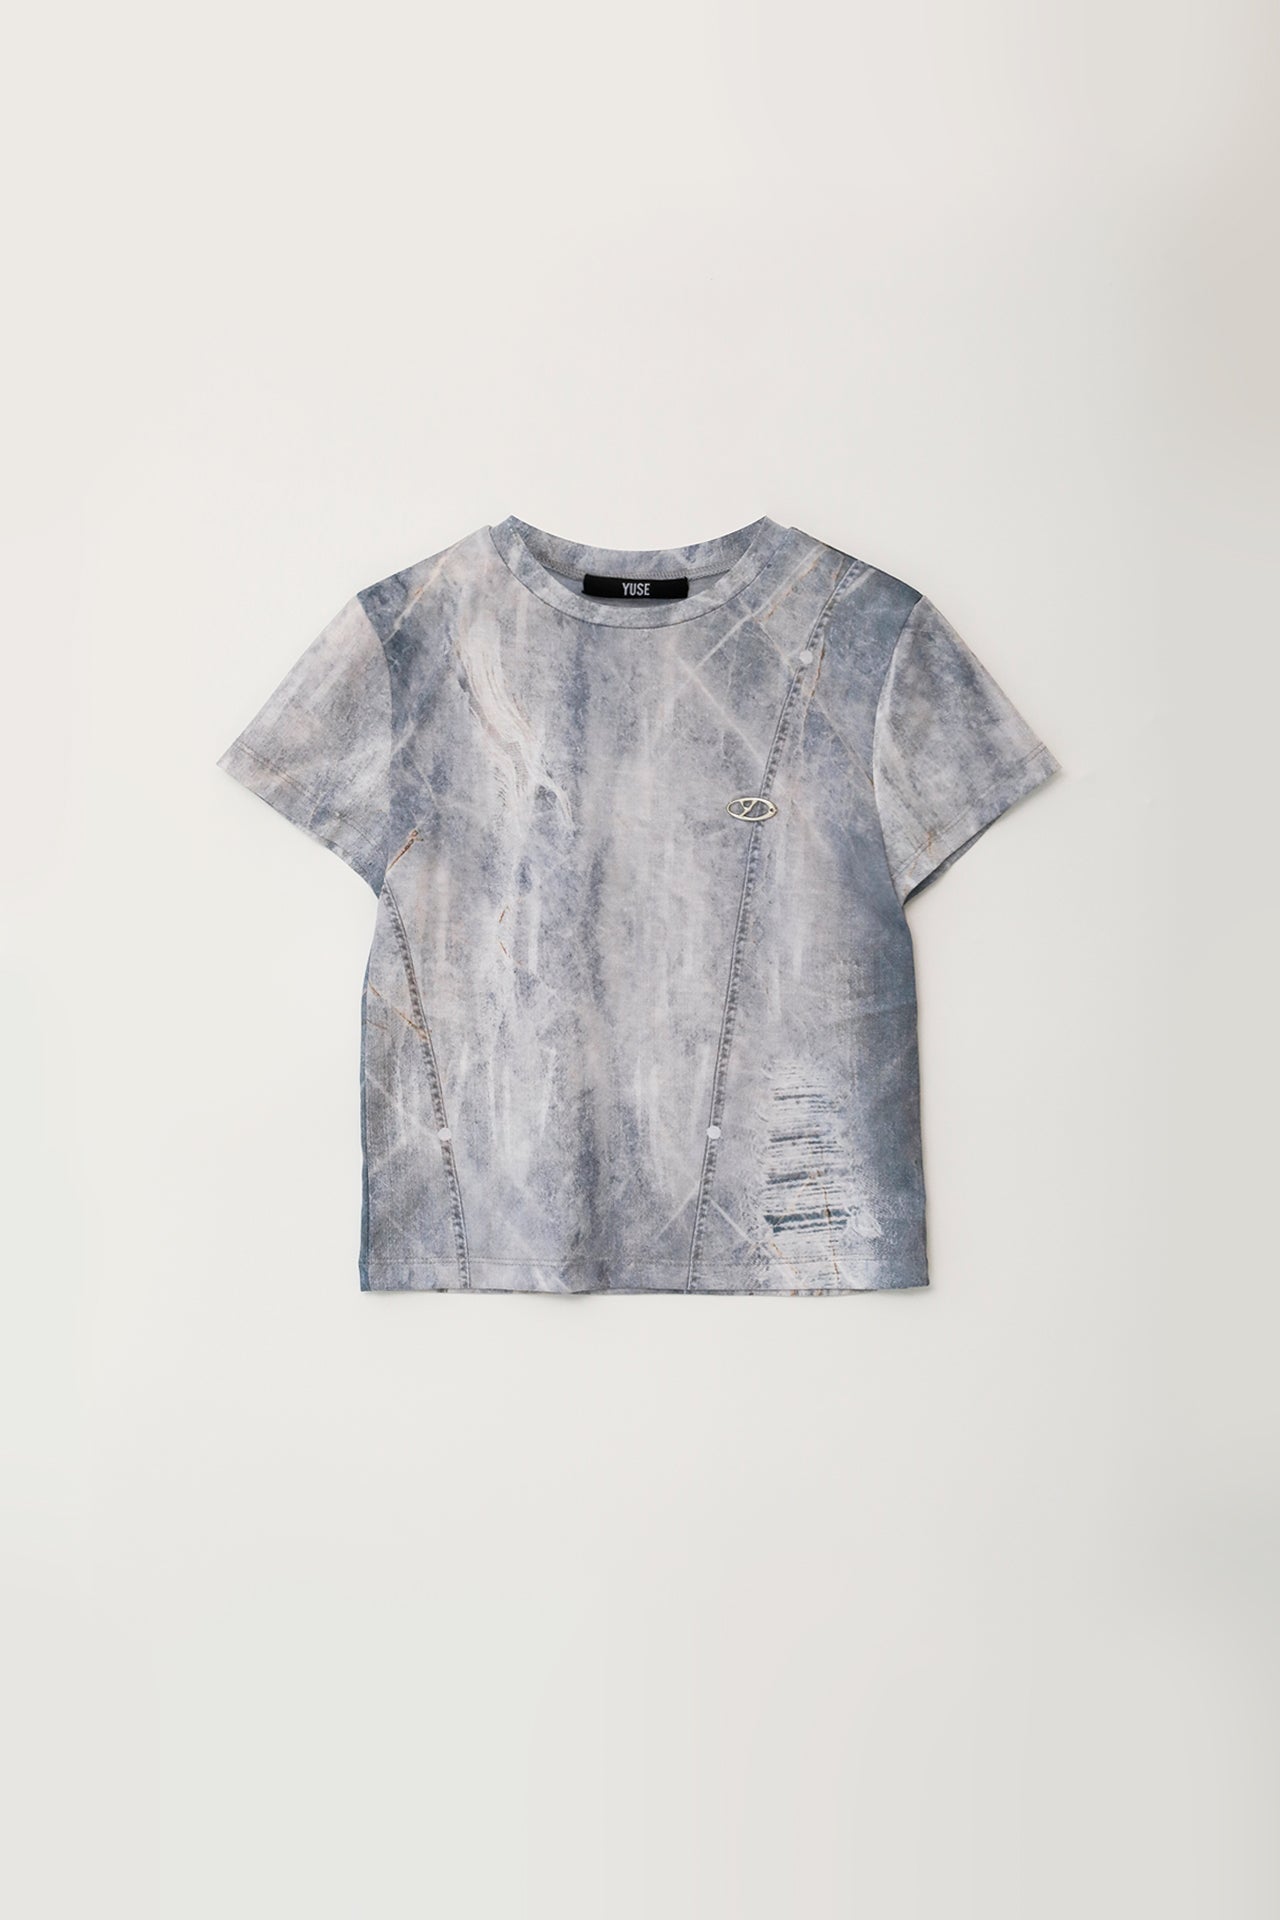 Yuse Denim Full Print Short Sleeve Round T-Shirt [Light Blue]